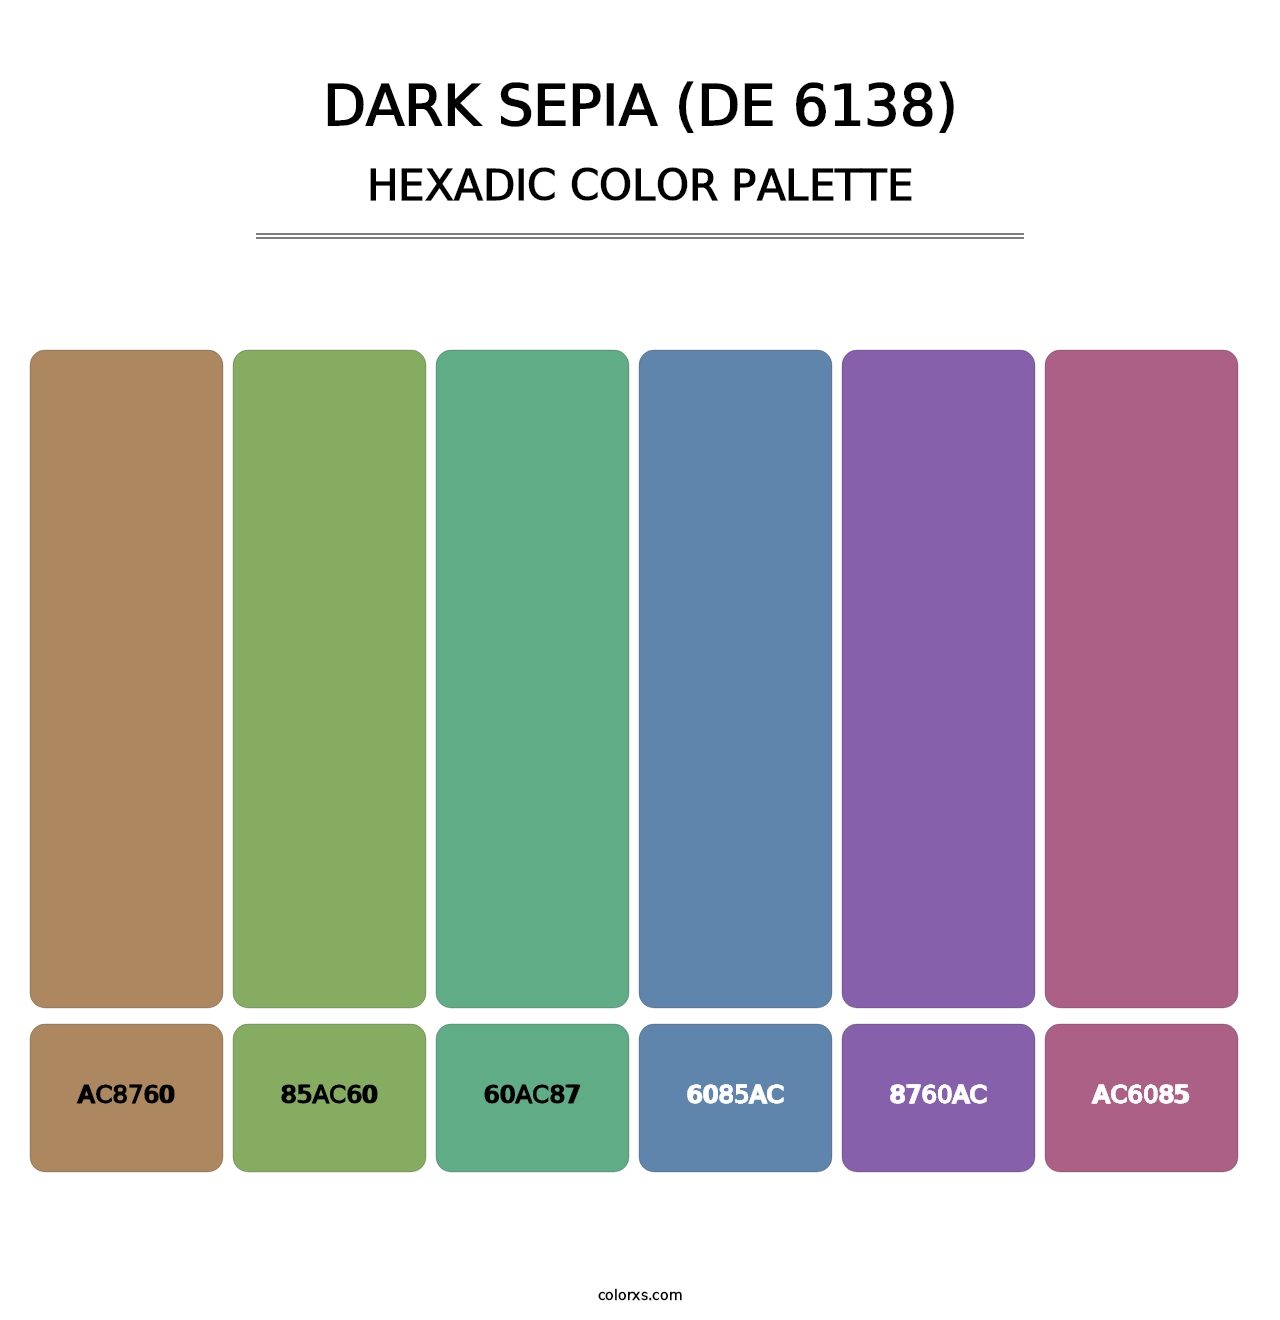 Dark Sepia (DE 6138) - Hexadic Color Palette